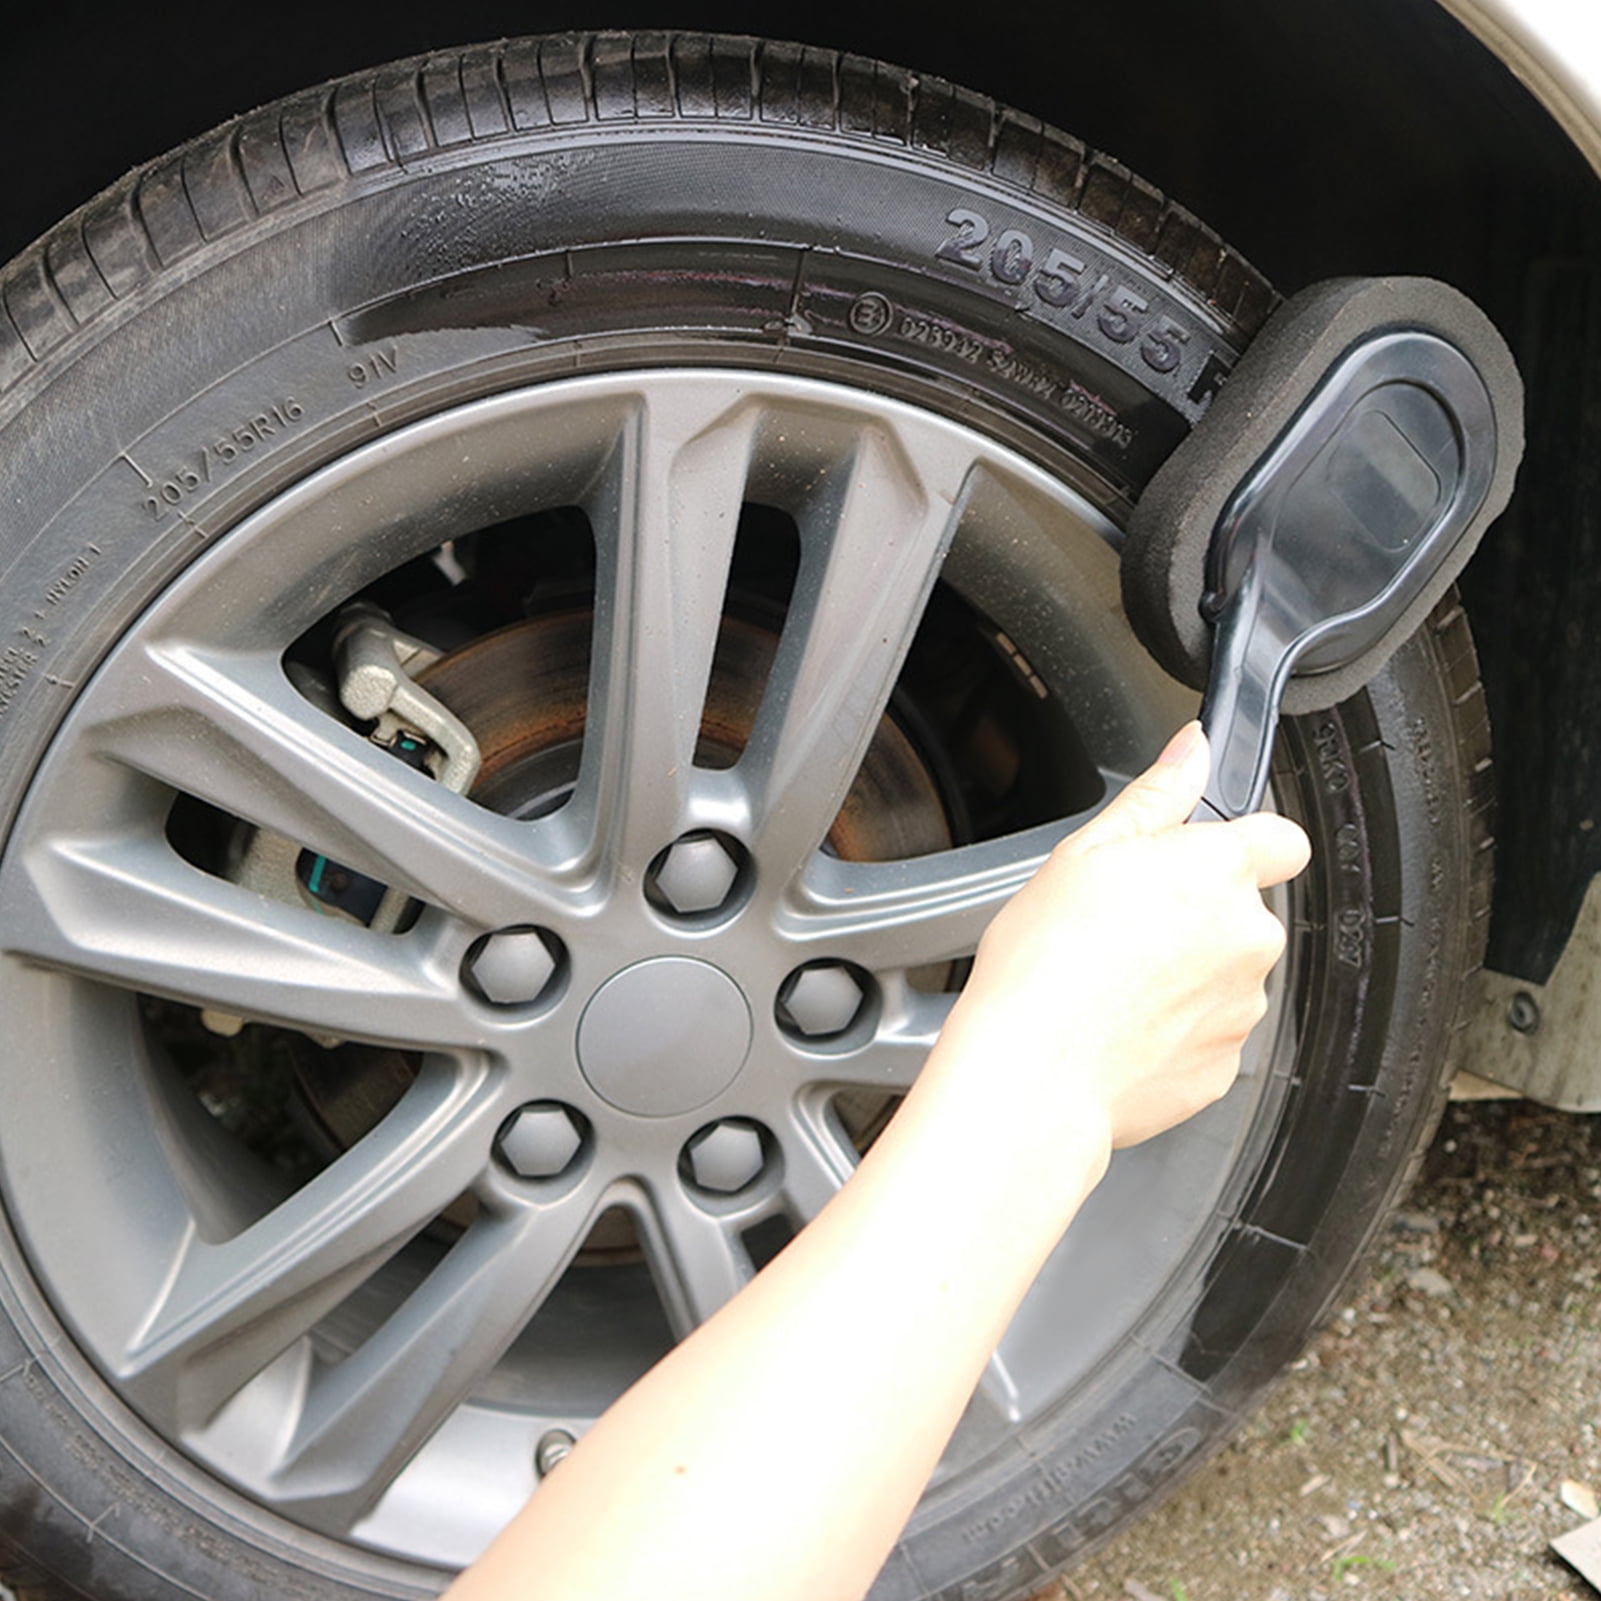 Tohuu Tire Shine Applicator Brush Tire Applicator with Long Handle